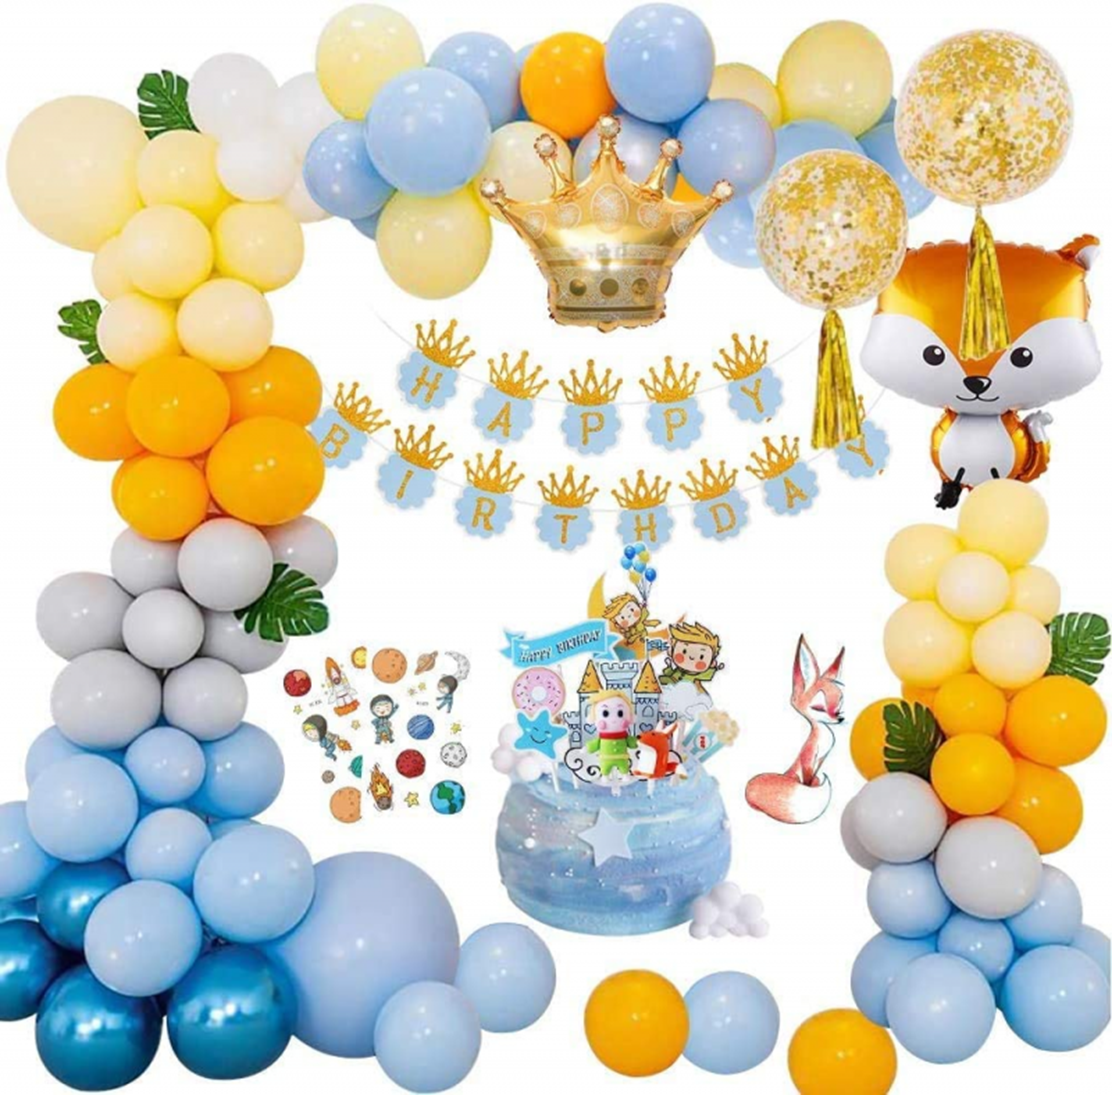 Royal Prince Theme Birthday Decoration ideas – Royal Birthday Theme